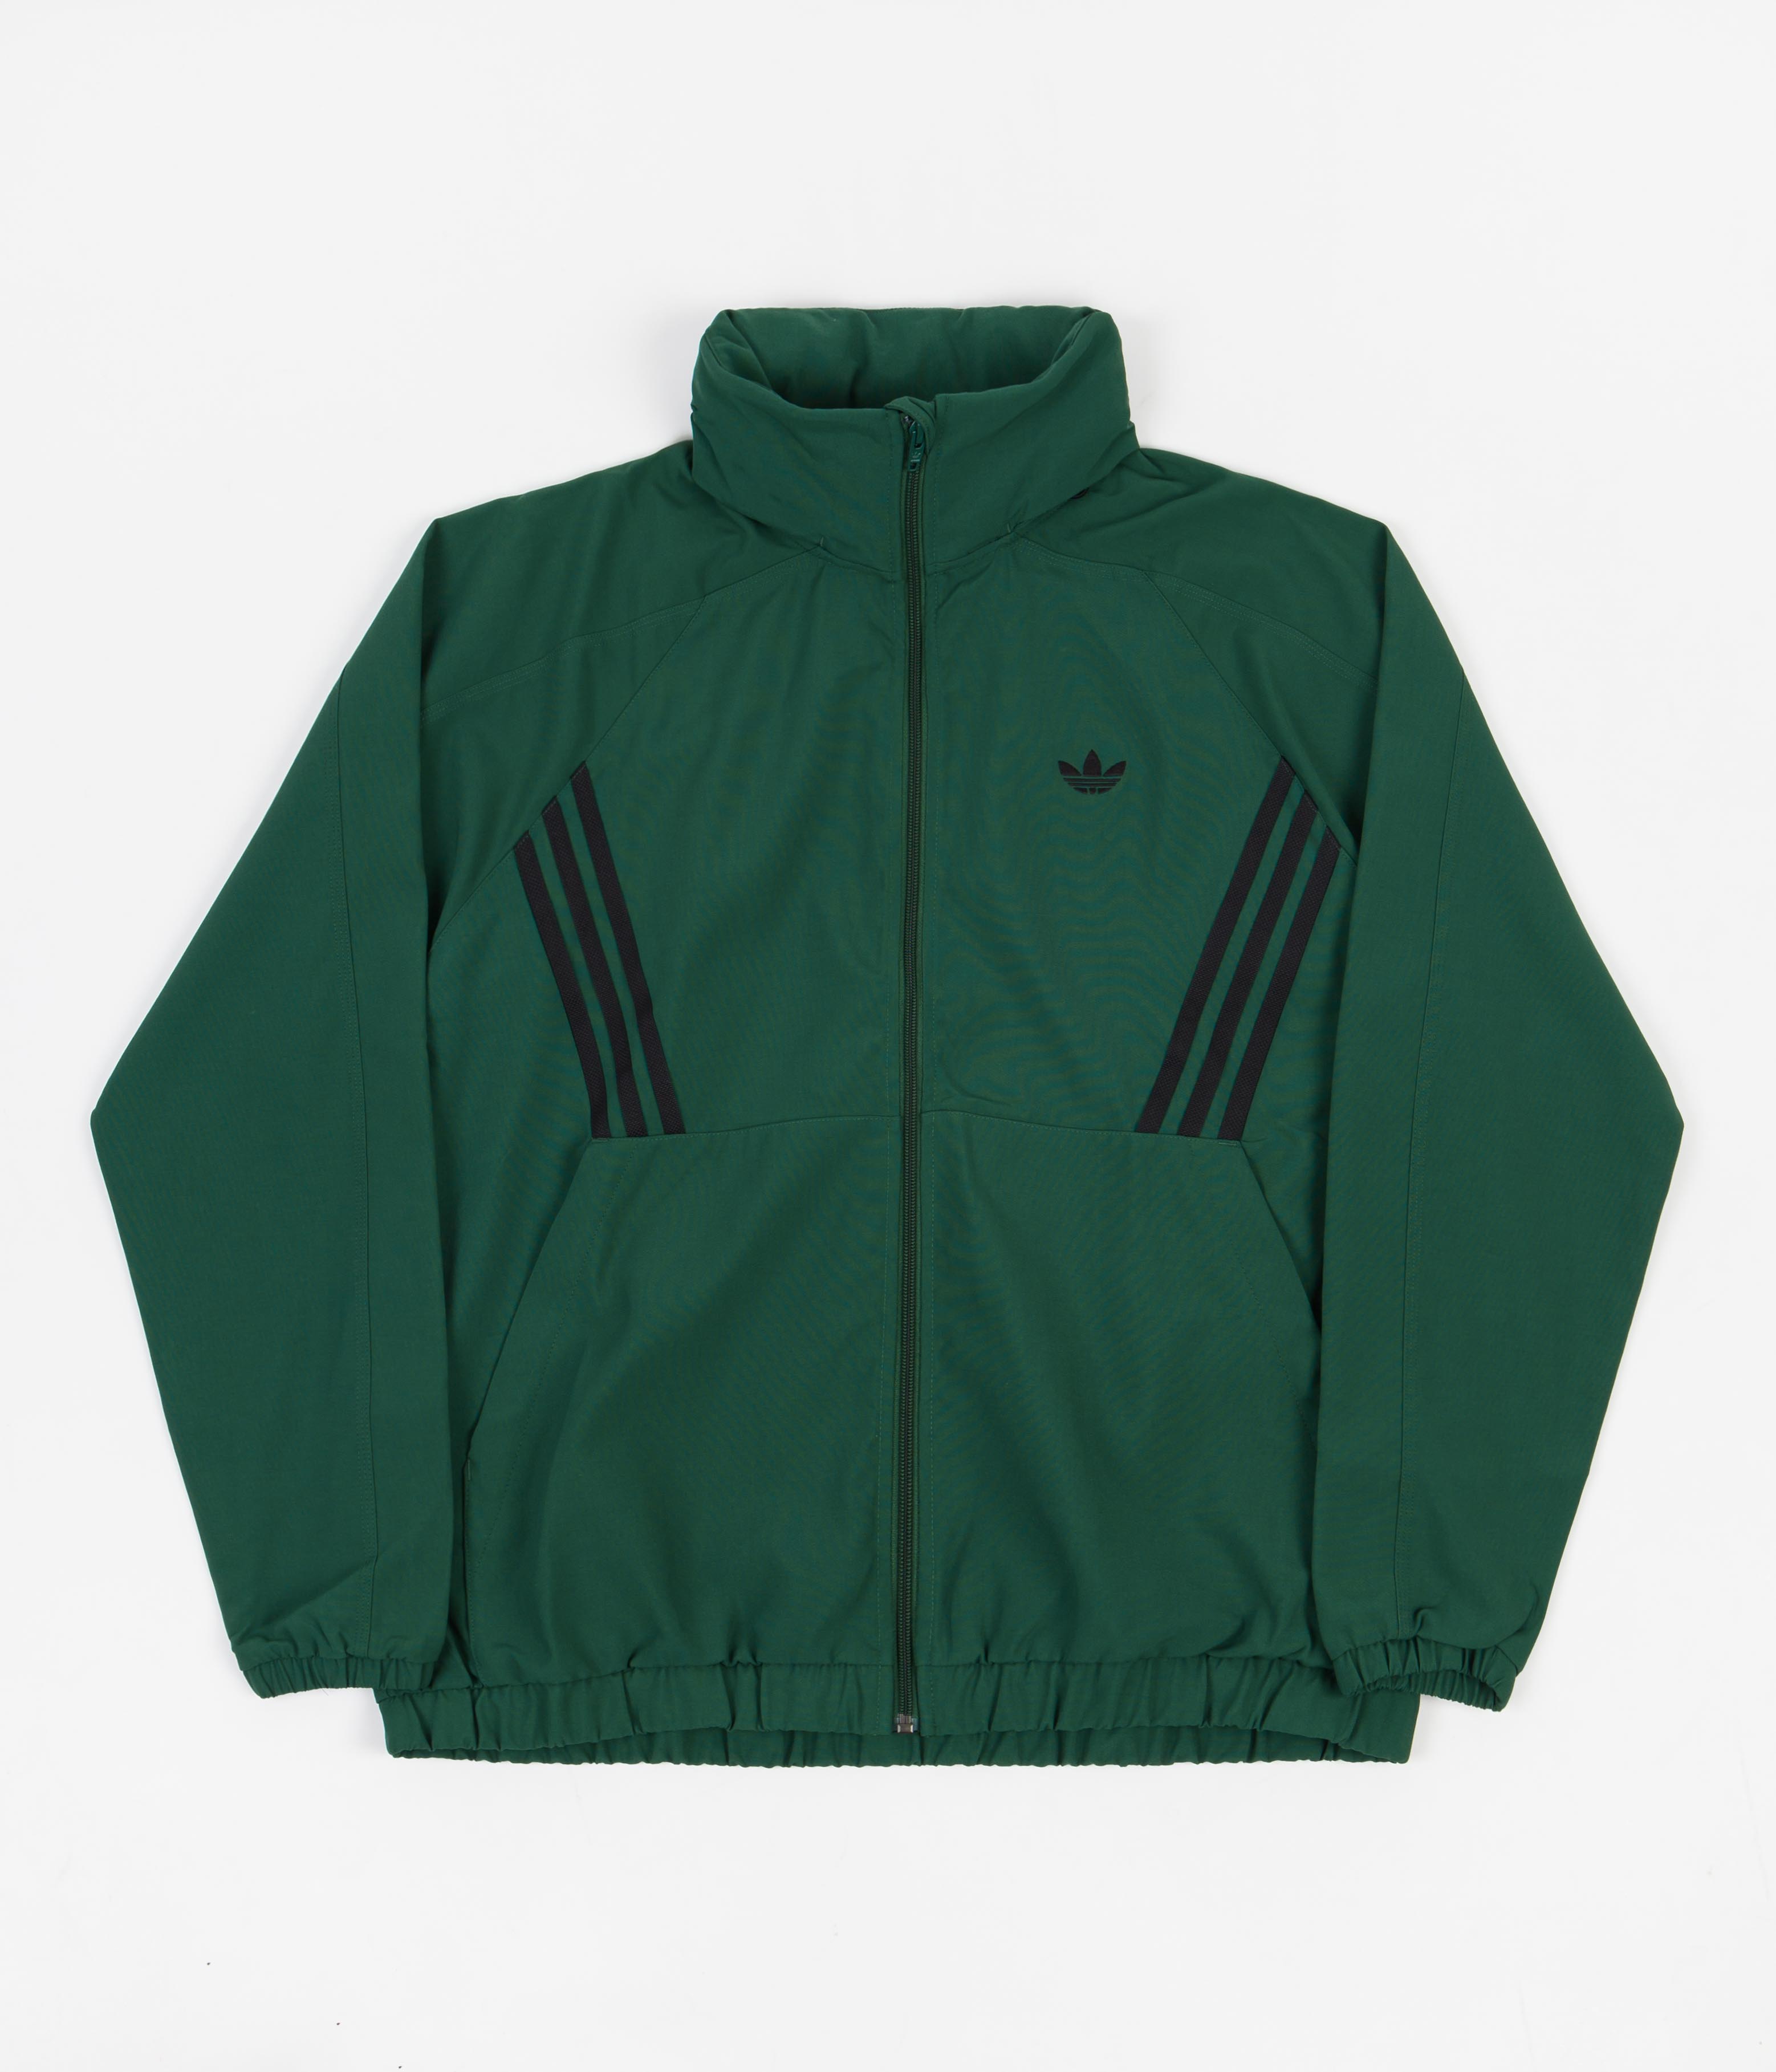 Collegiate Green / Black Adidas Workshop Windbreaker Jacket - cavs lebron adidas sleeve jerseys for sale - WpadcShops